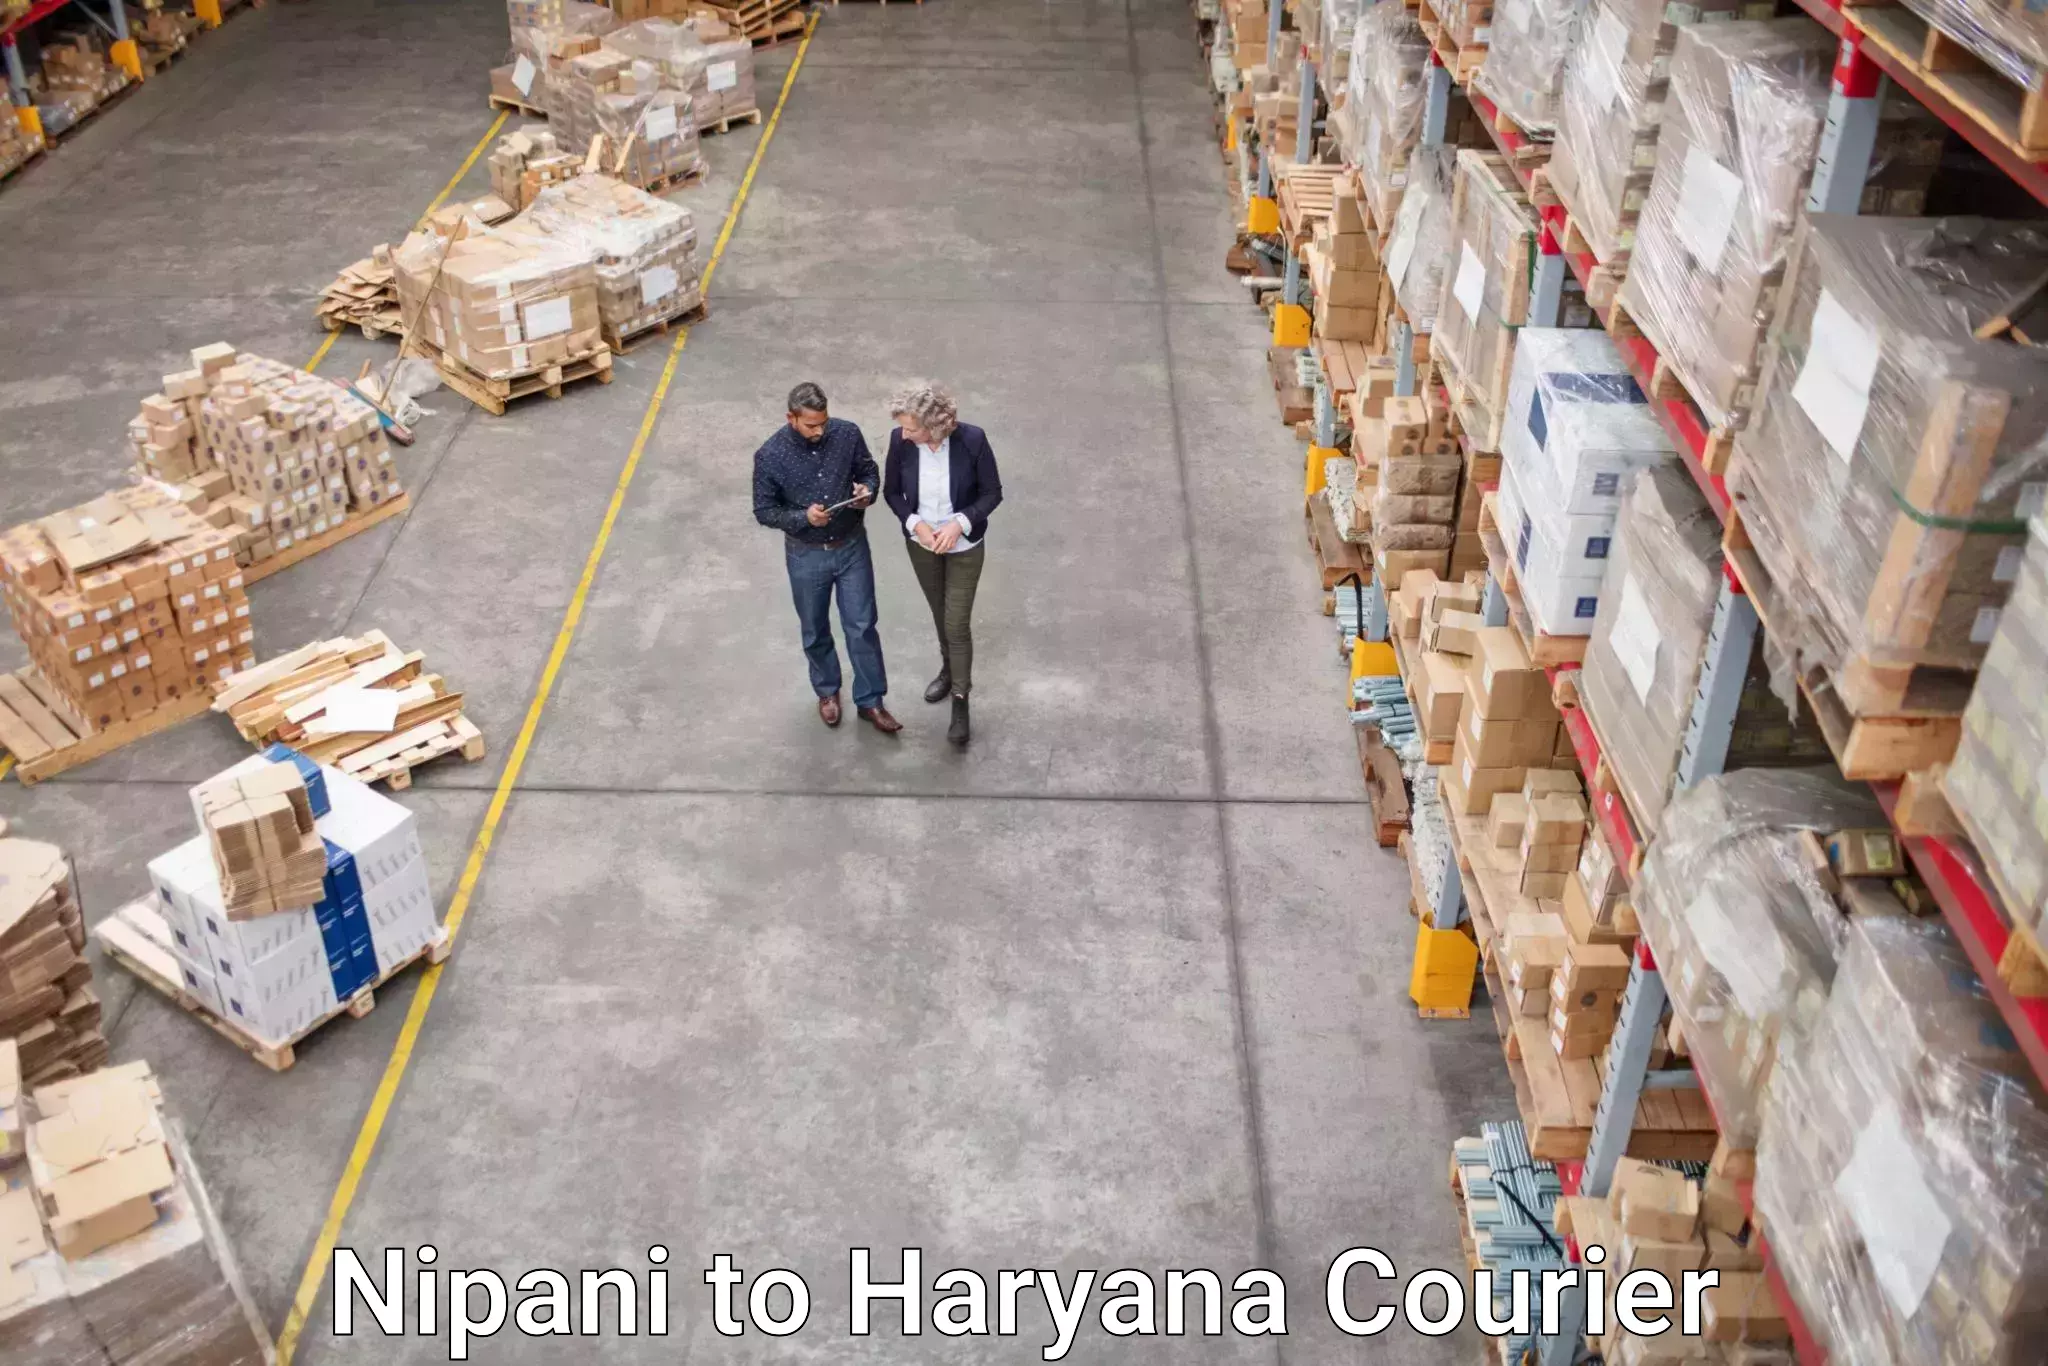 24-hour courier service Nipani to NCR Haryana